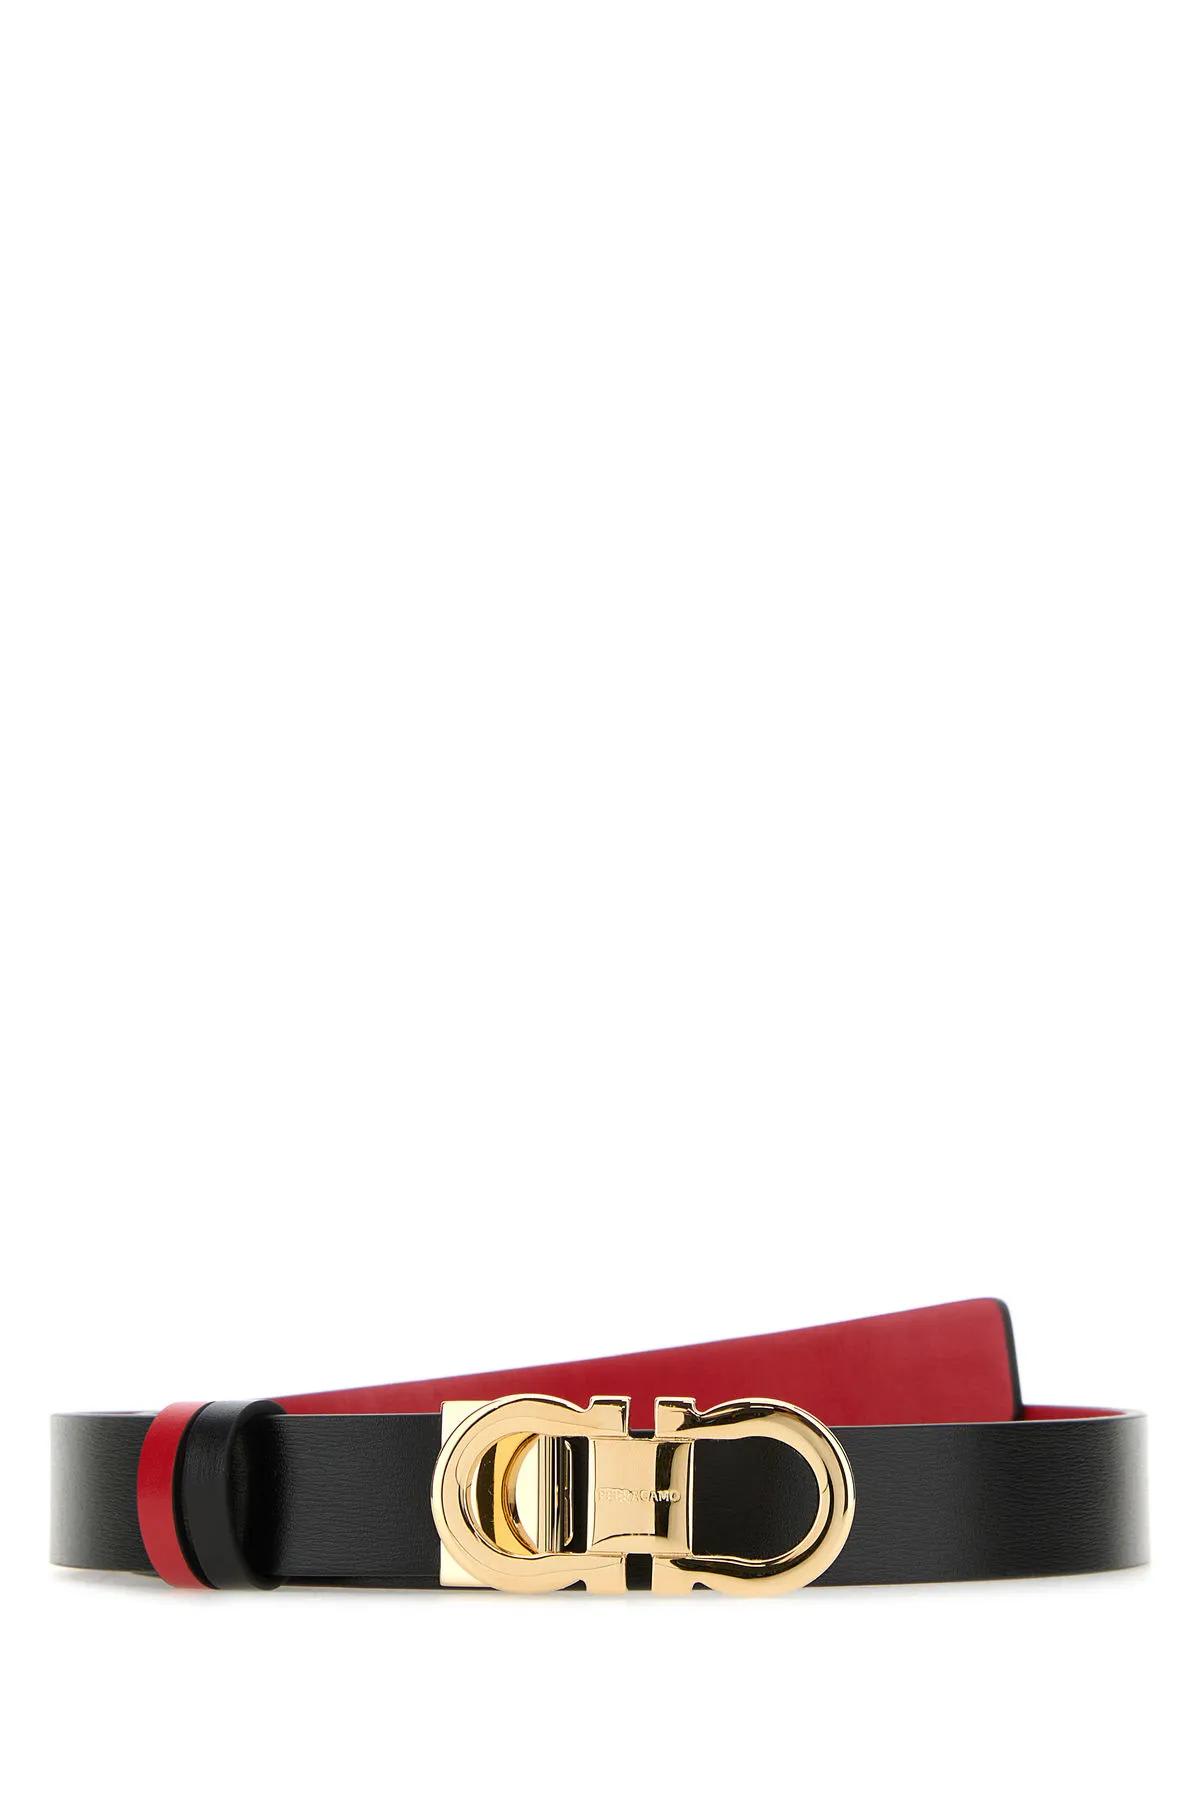 Ferragamo Black Leather Reversible Belt In Nero/flame Red